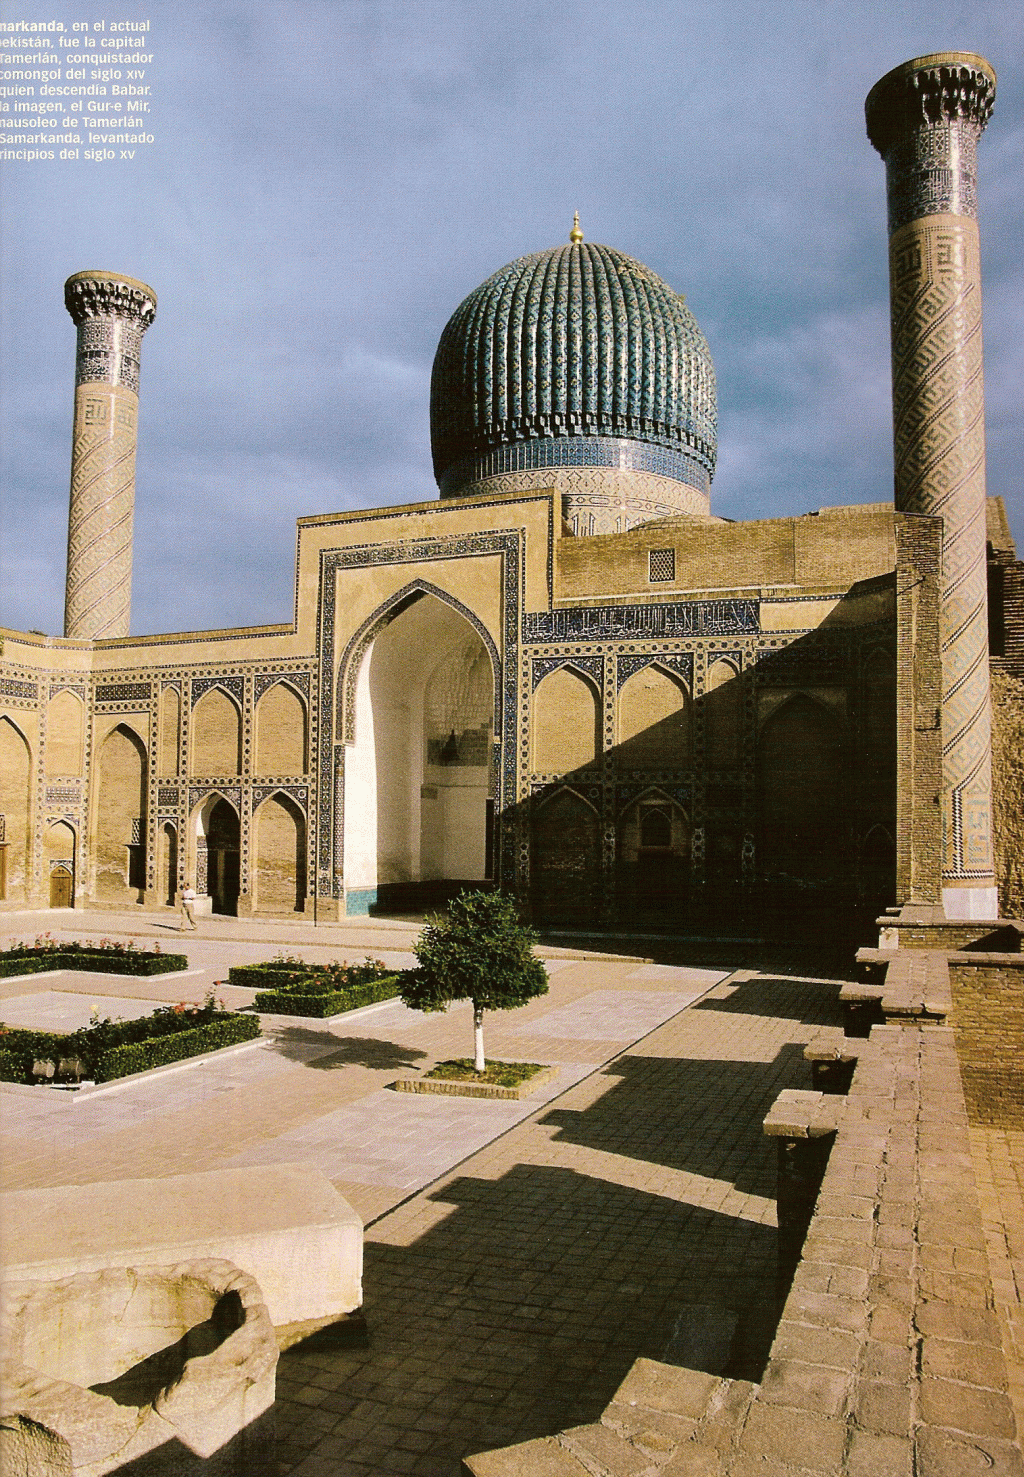 Arq XV Mausoleo Tamerlan Gure Mir Samarkanda Uzbekistan Principios de Siglo